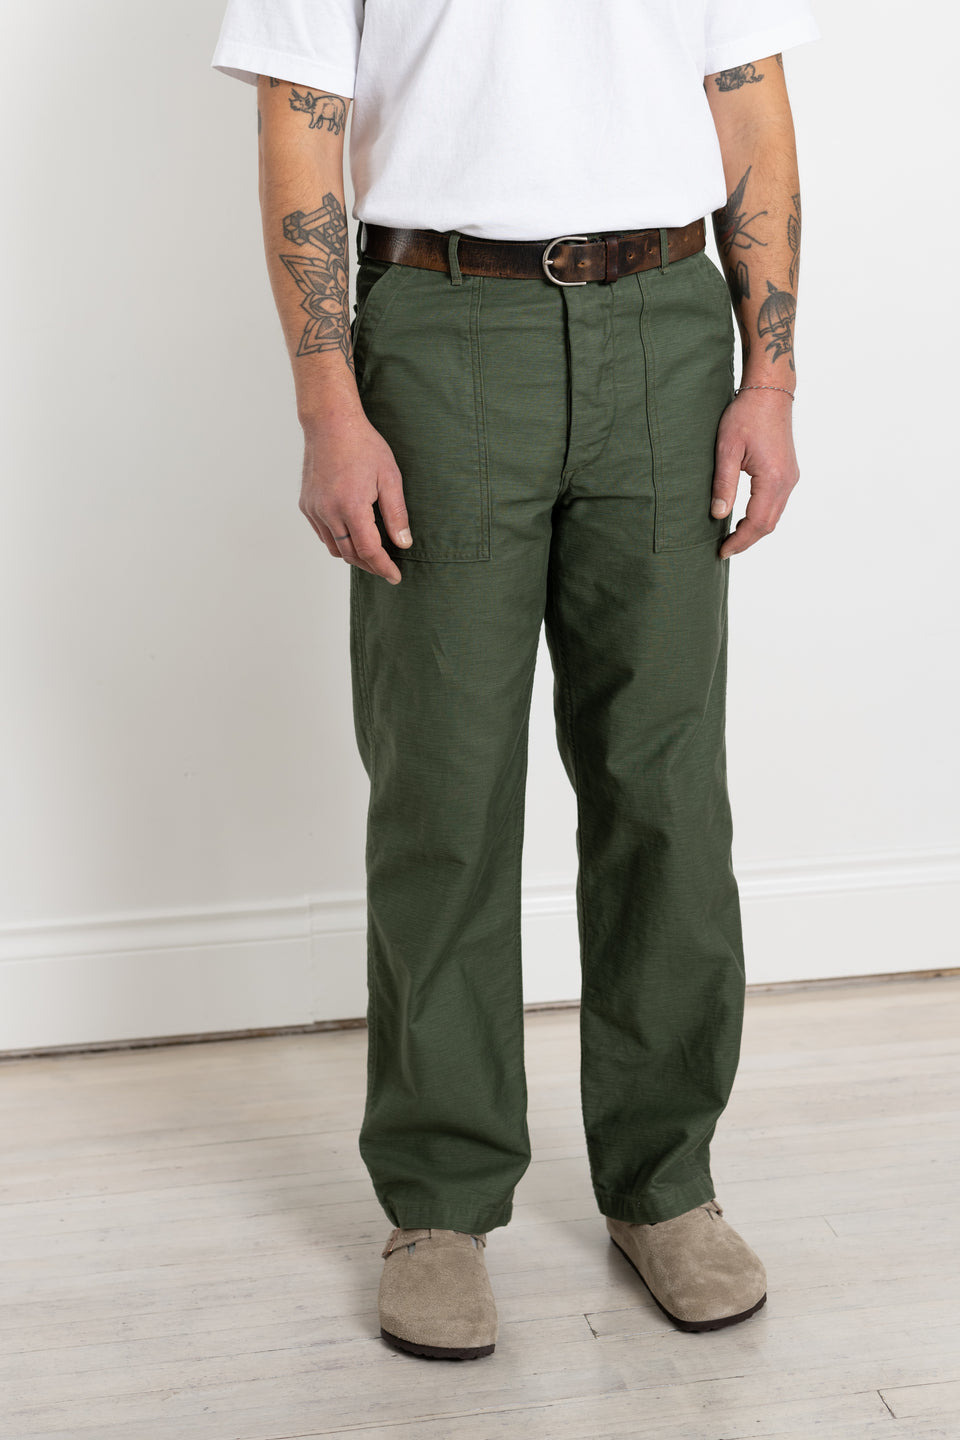 US Army Fatigue Pants Regular Fit Green